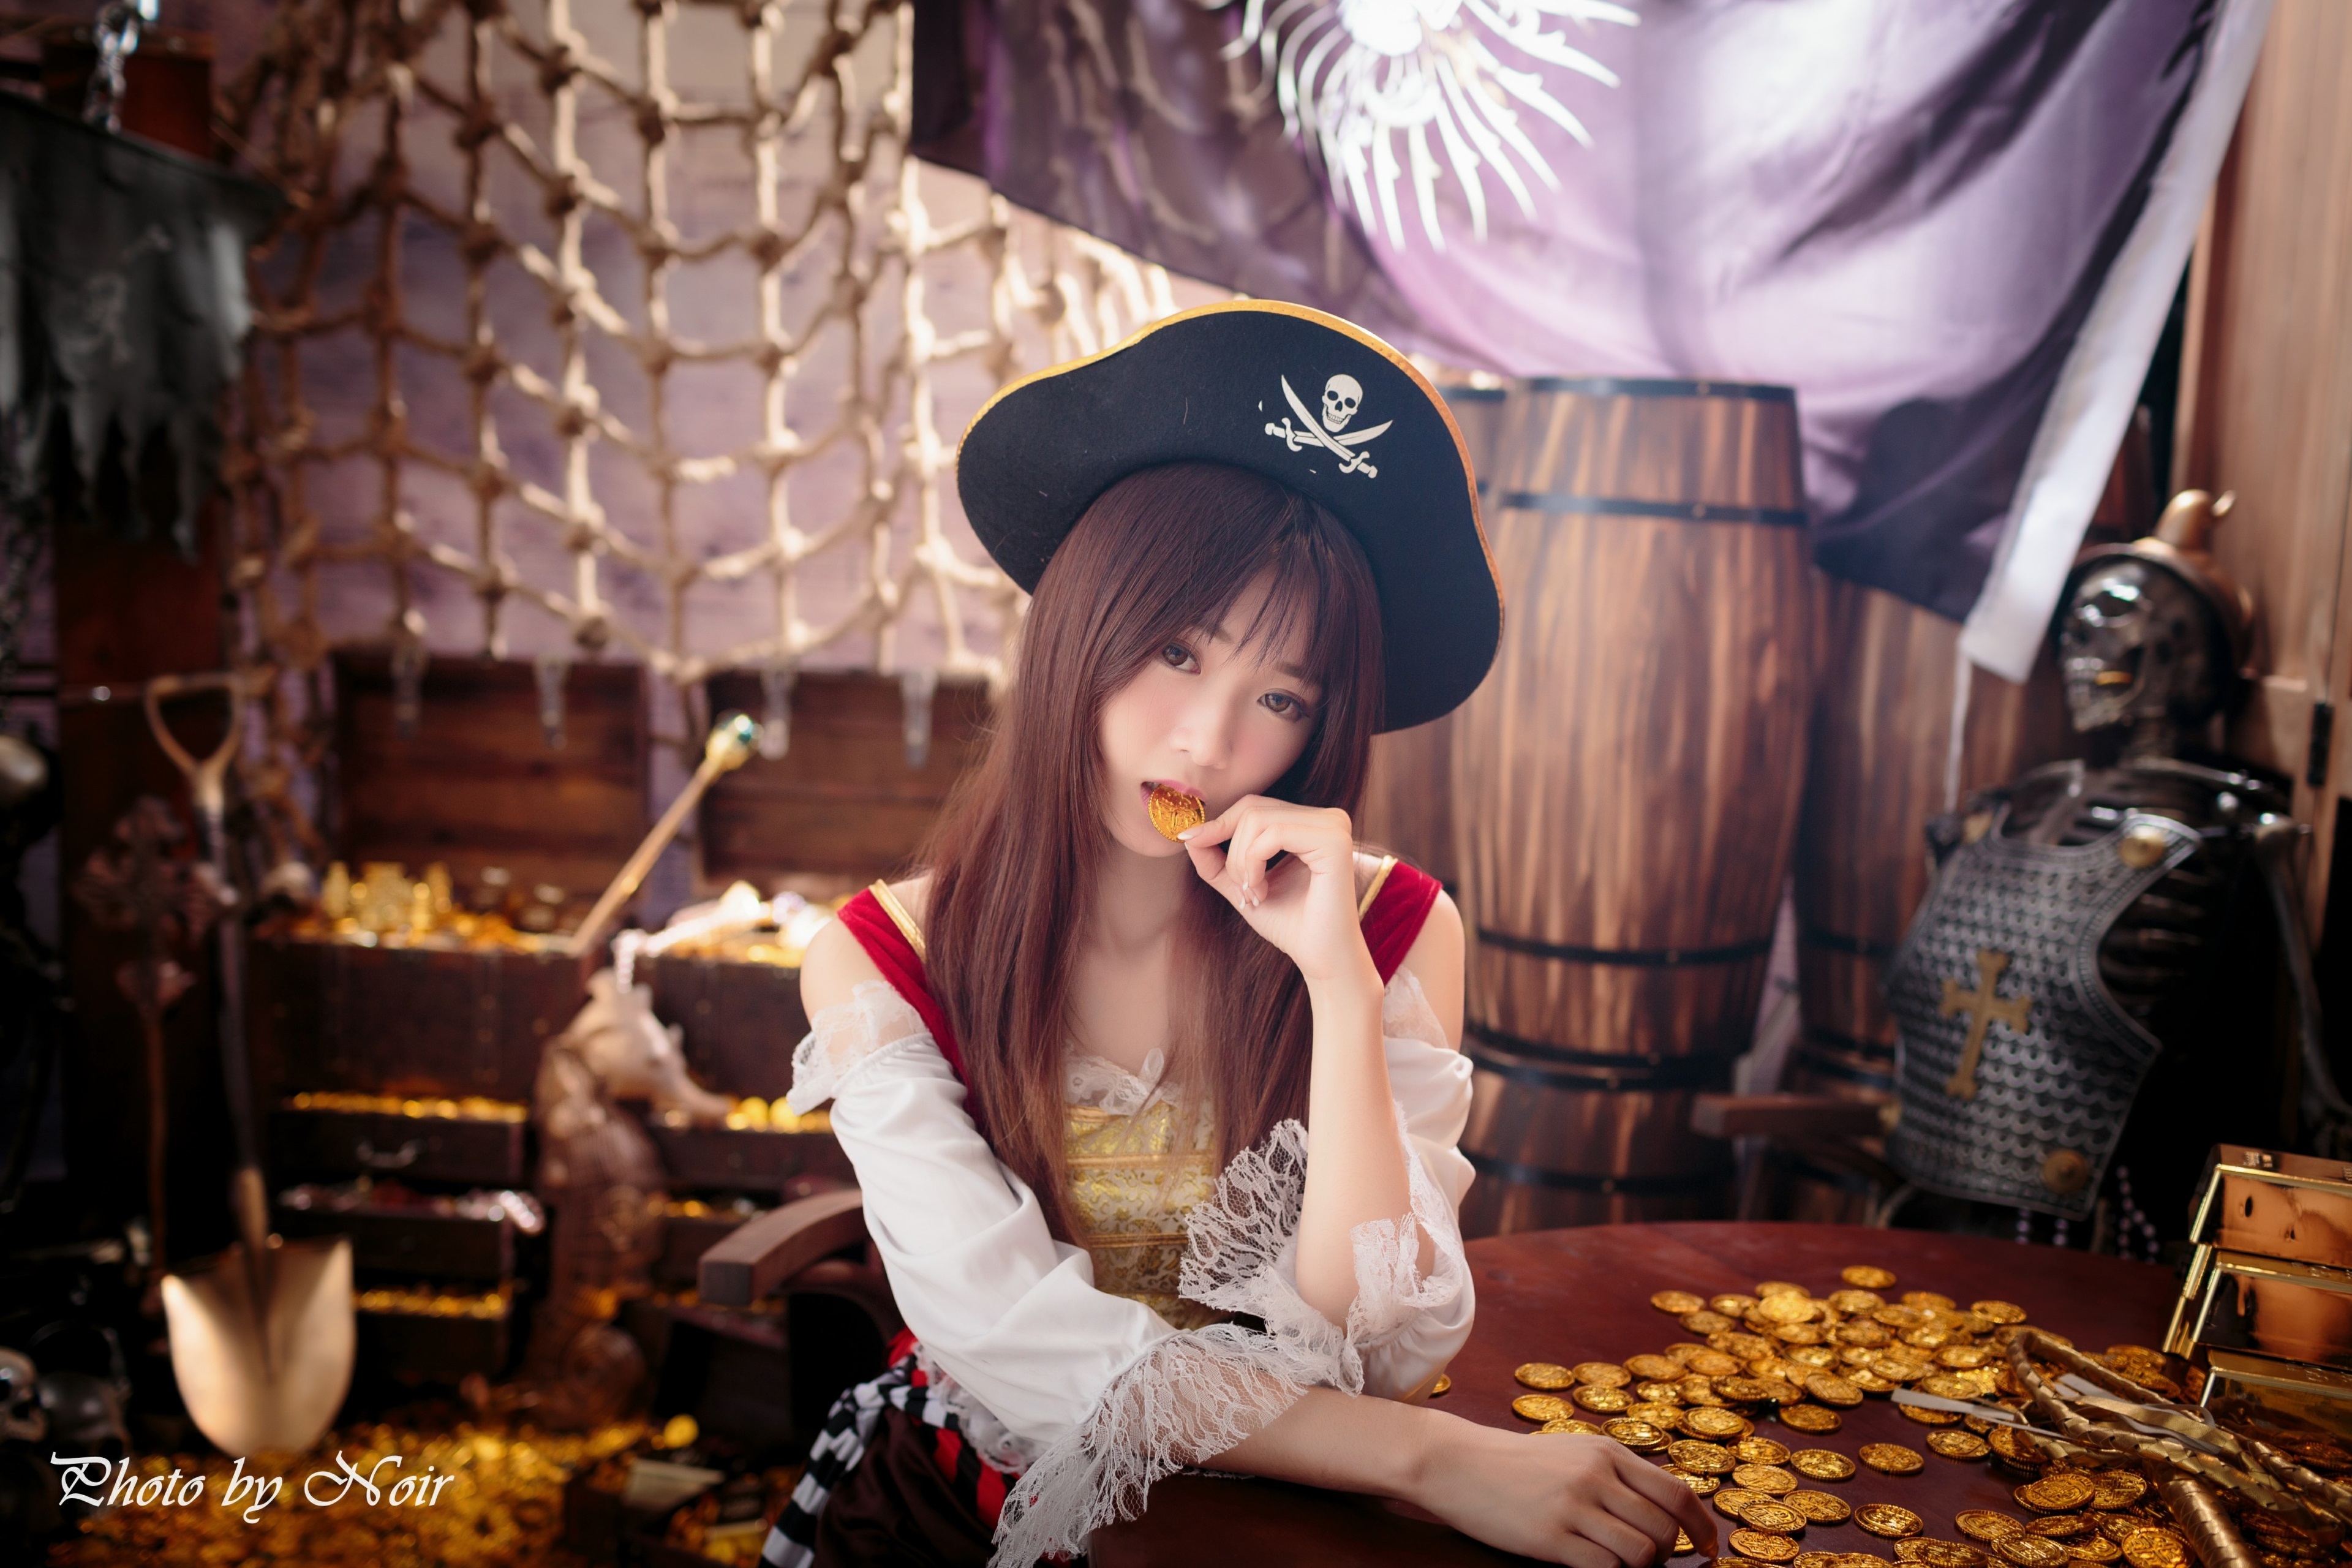 Women Model Brunette Long Hair Asian Bangs Coin Pirates Skull And Bones Hat Cosplay Coins Fishnets G 3840x2560